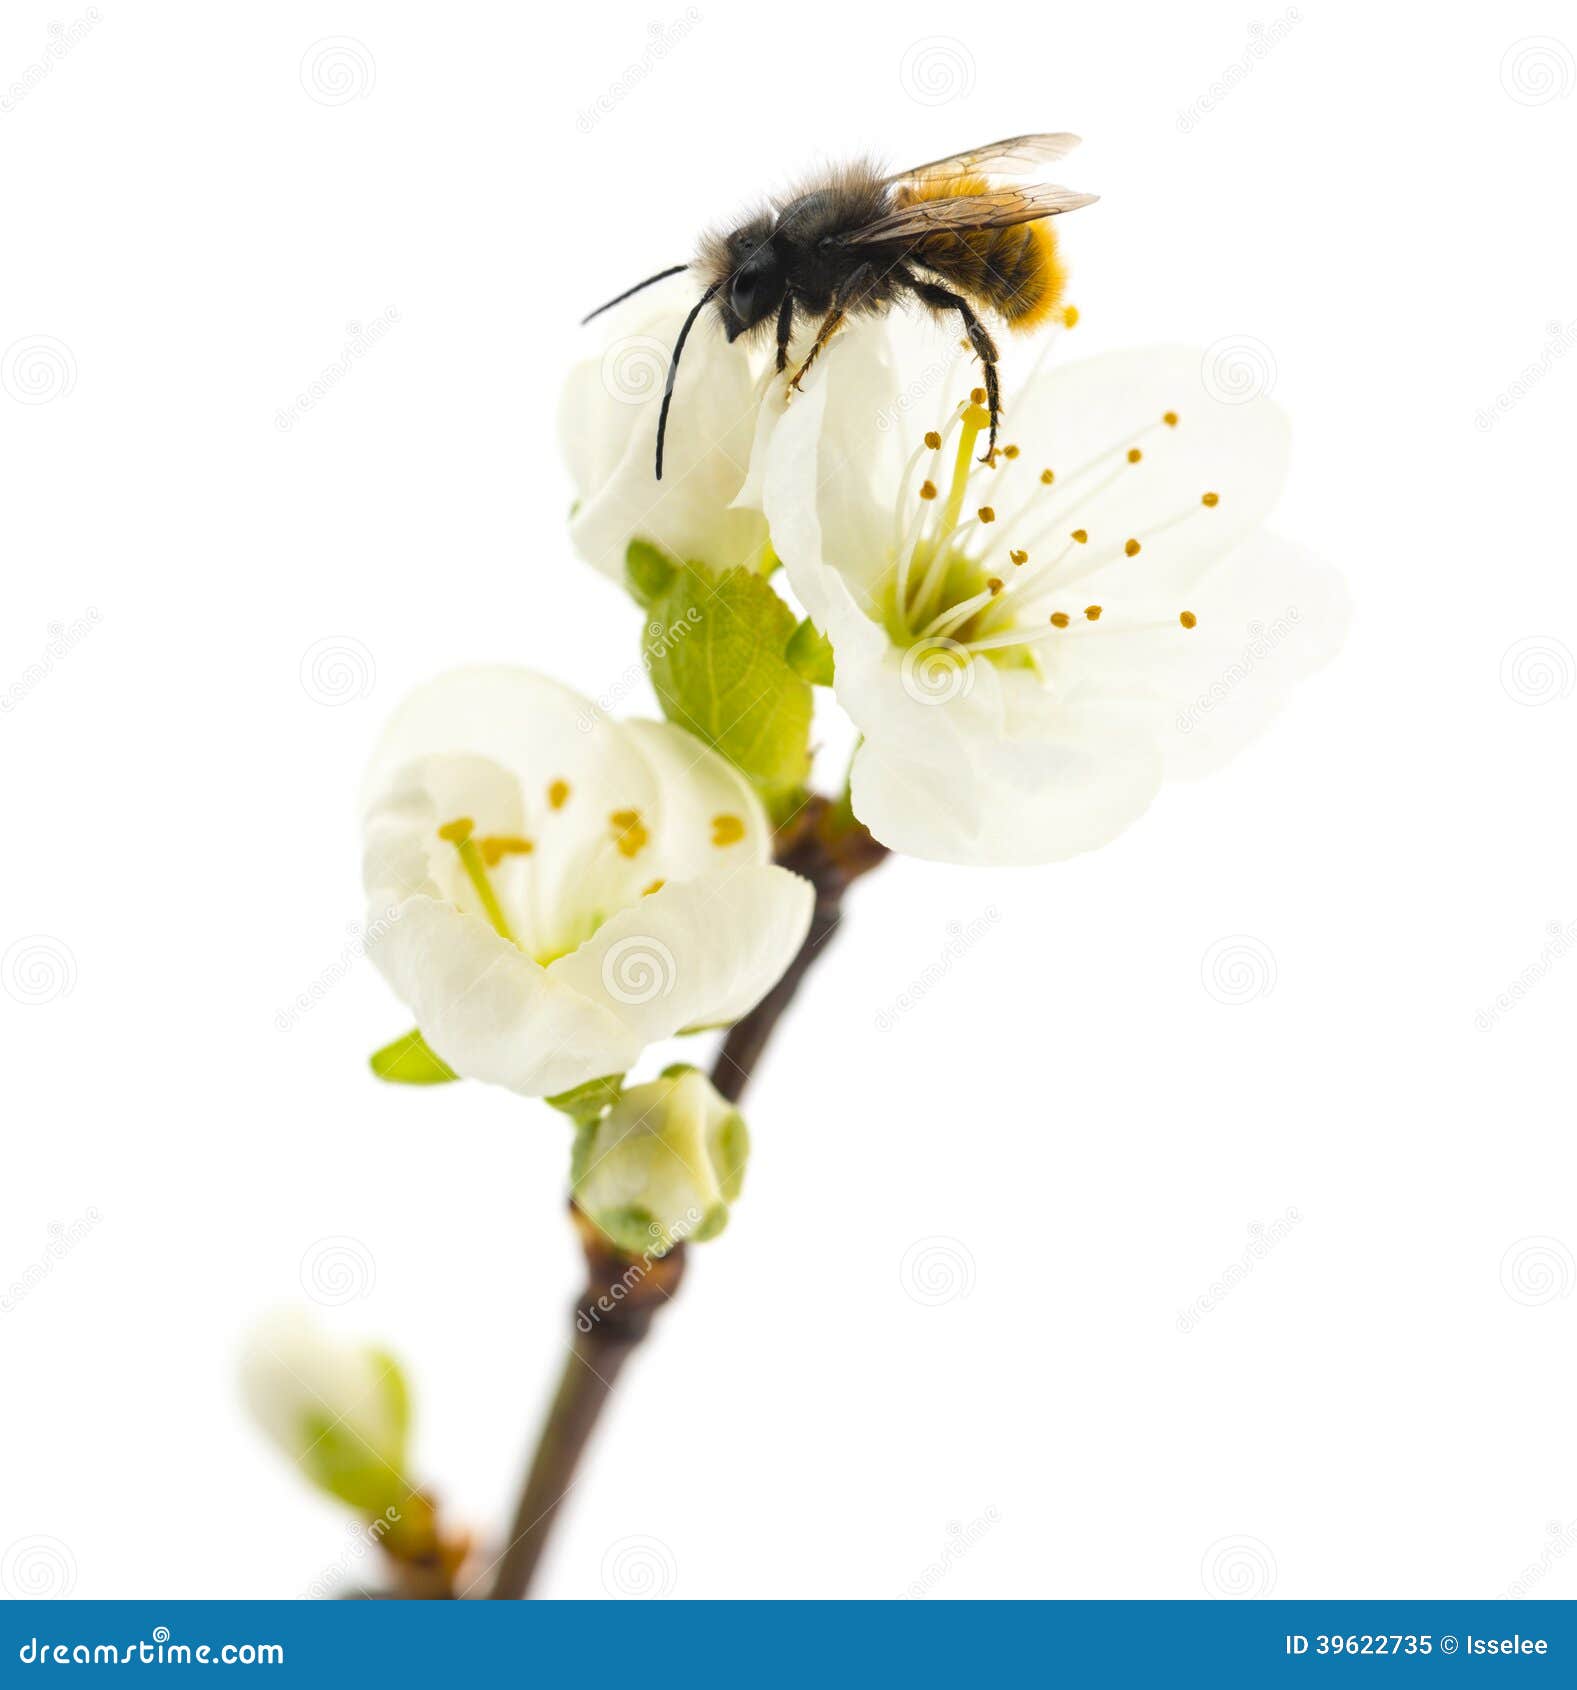 bee pollinating a flower - apis mellifera